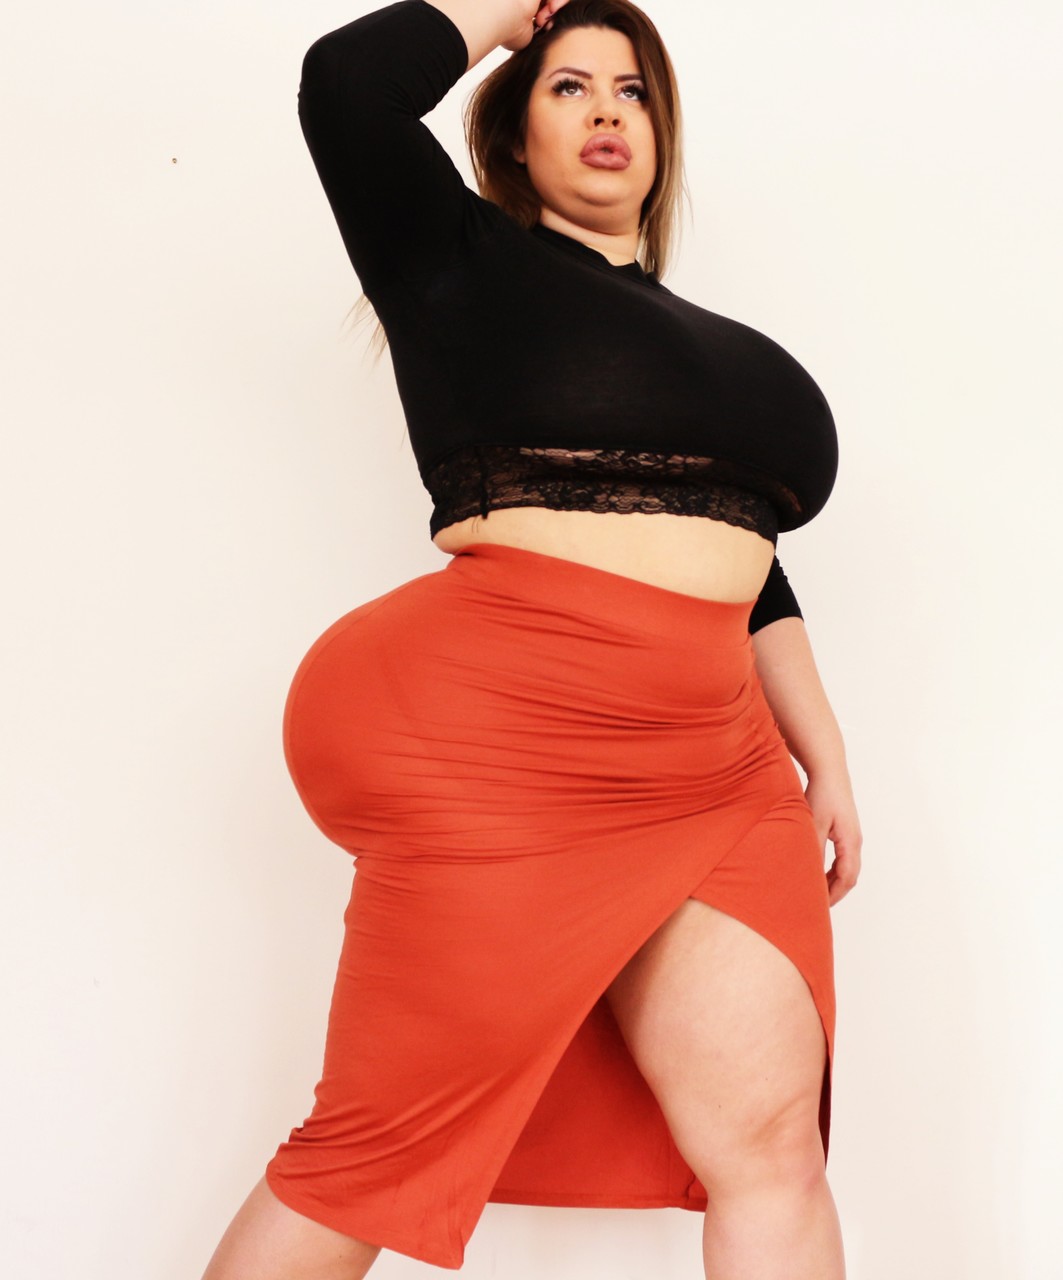 Stunning MILF fatty Natasha Crown flaunting her very big ass in a tight skirt ポルノ写真 #423816656 | Natasha Crown Pics, Natasha Crown, BBW, モバイルポルノ